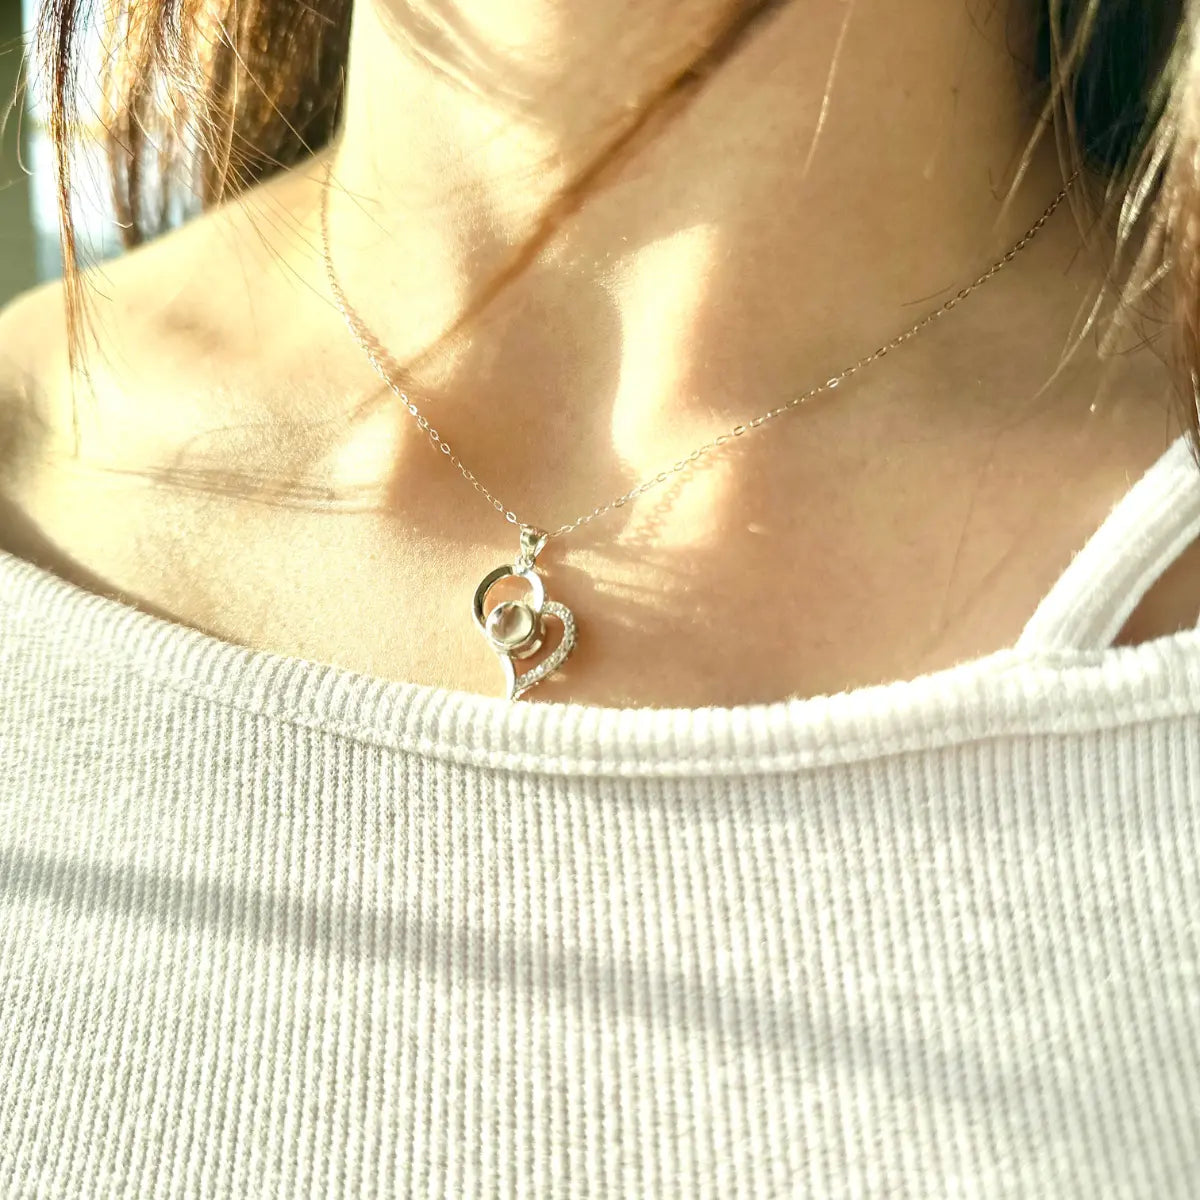 Cuswelry - Eternal Heart Necklace